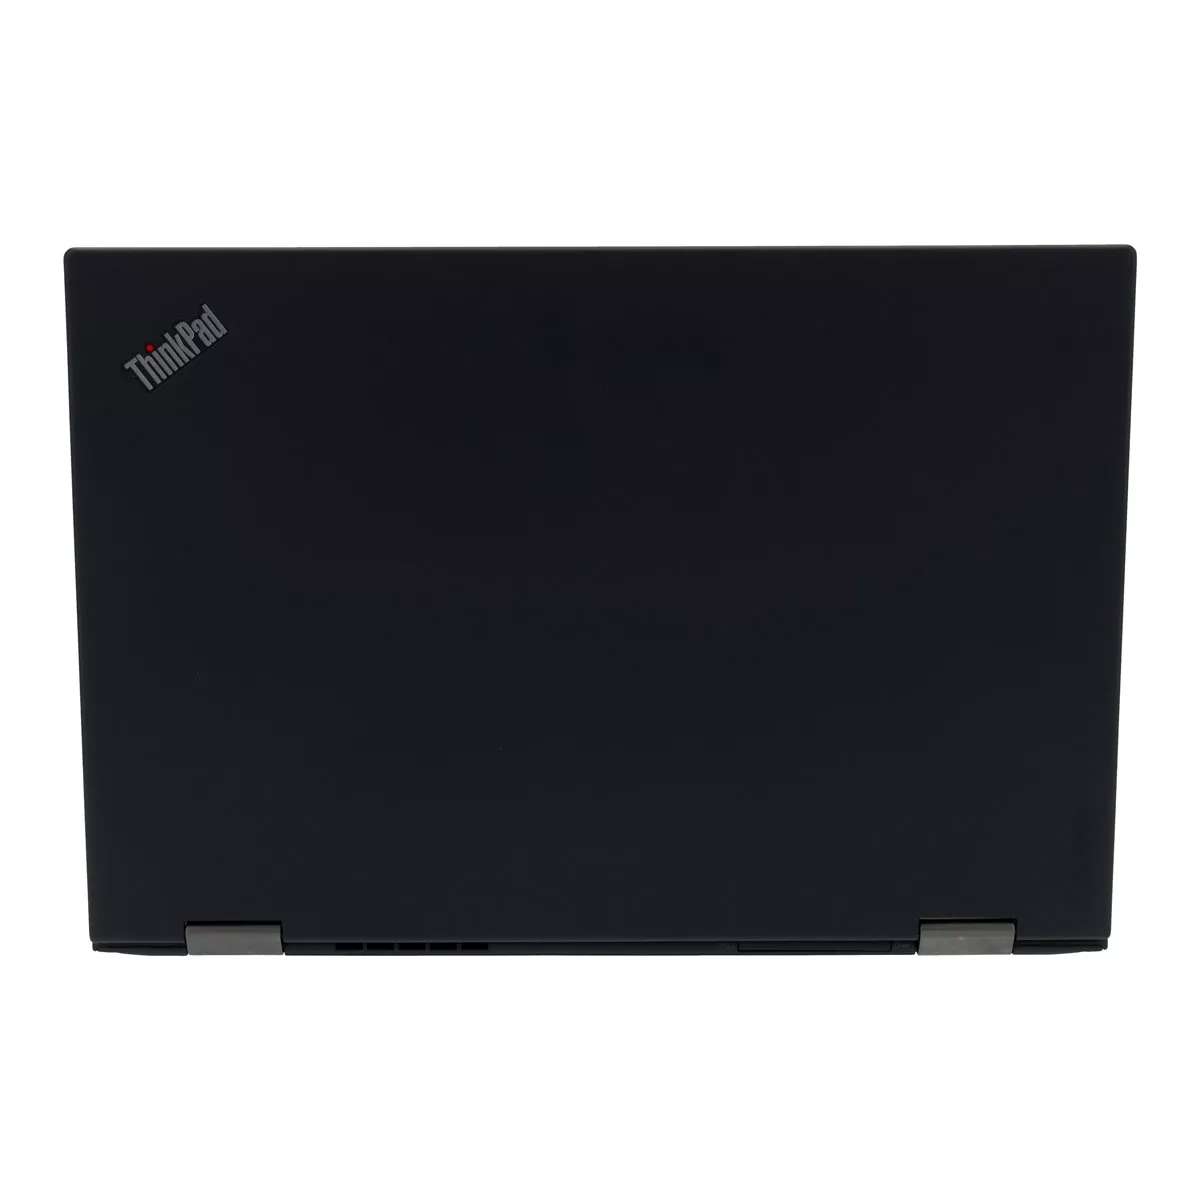 Lenovo ThinkPad X1 Yoga G2 Core i5 7300U Full-HD Touch 16 GB 500 GB M.2 SSD Webcam B